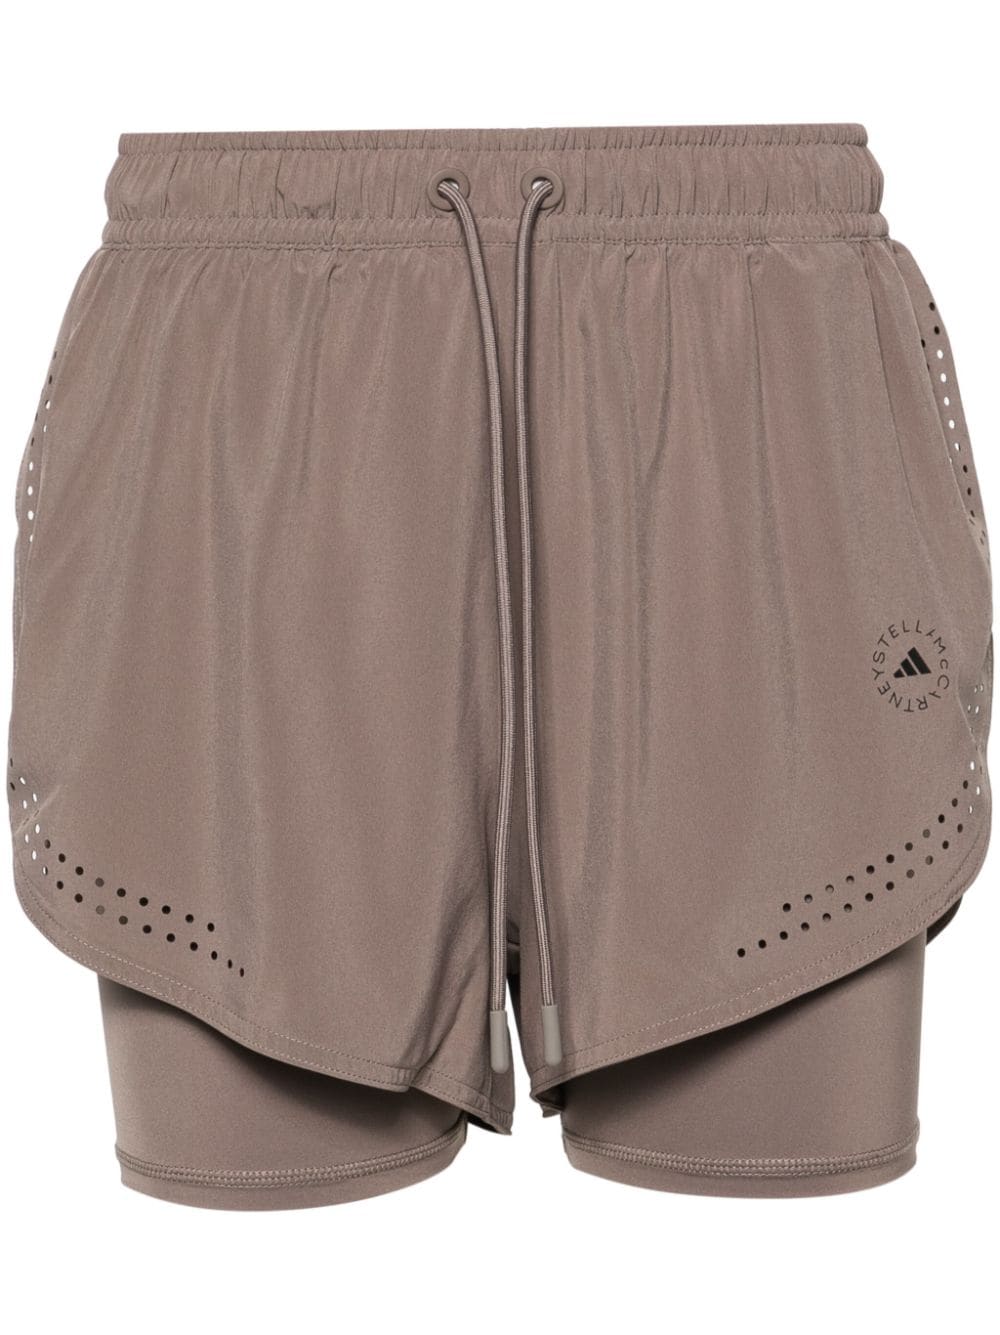 Adidas By Stella Mccartney Truepurpose Perforated Shorts In Brown